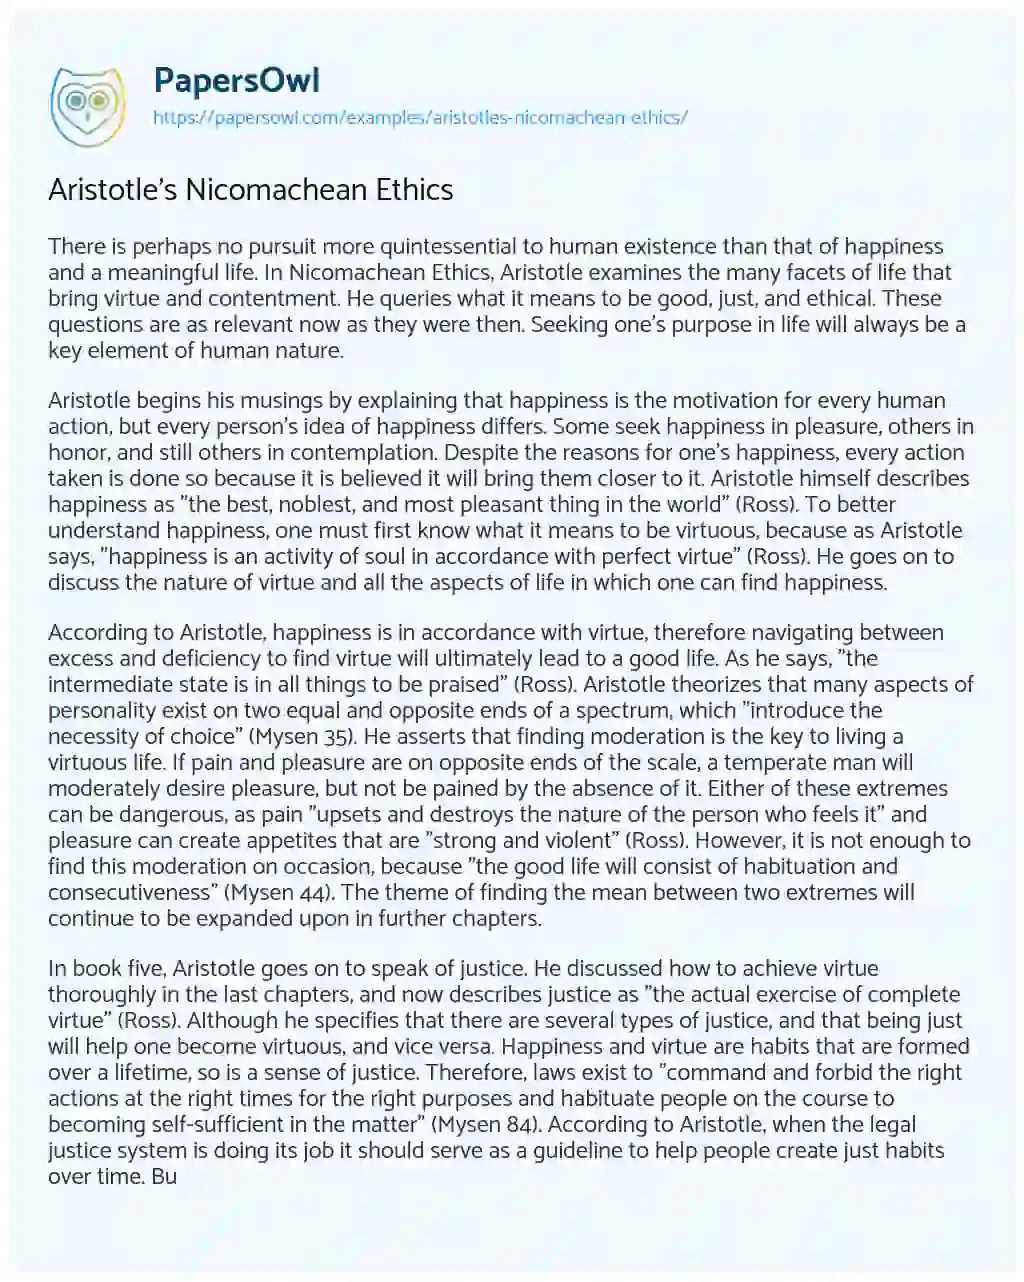 Essay on Aristotle’s Nicomachean Ethics